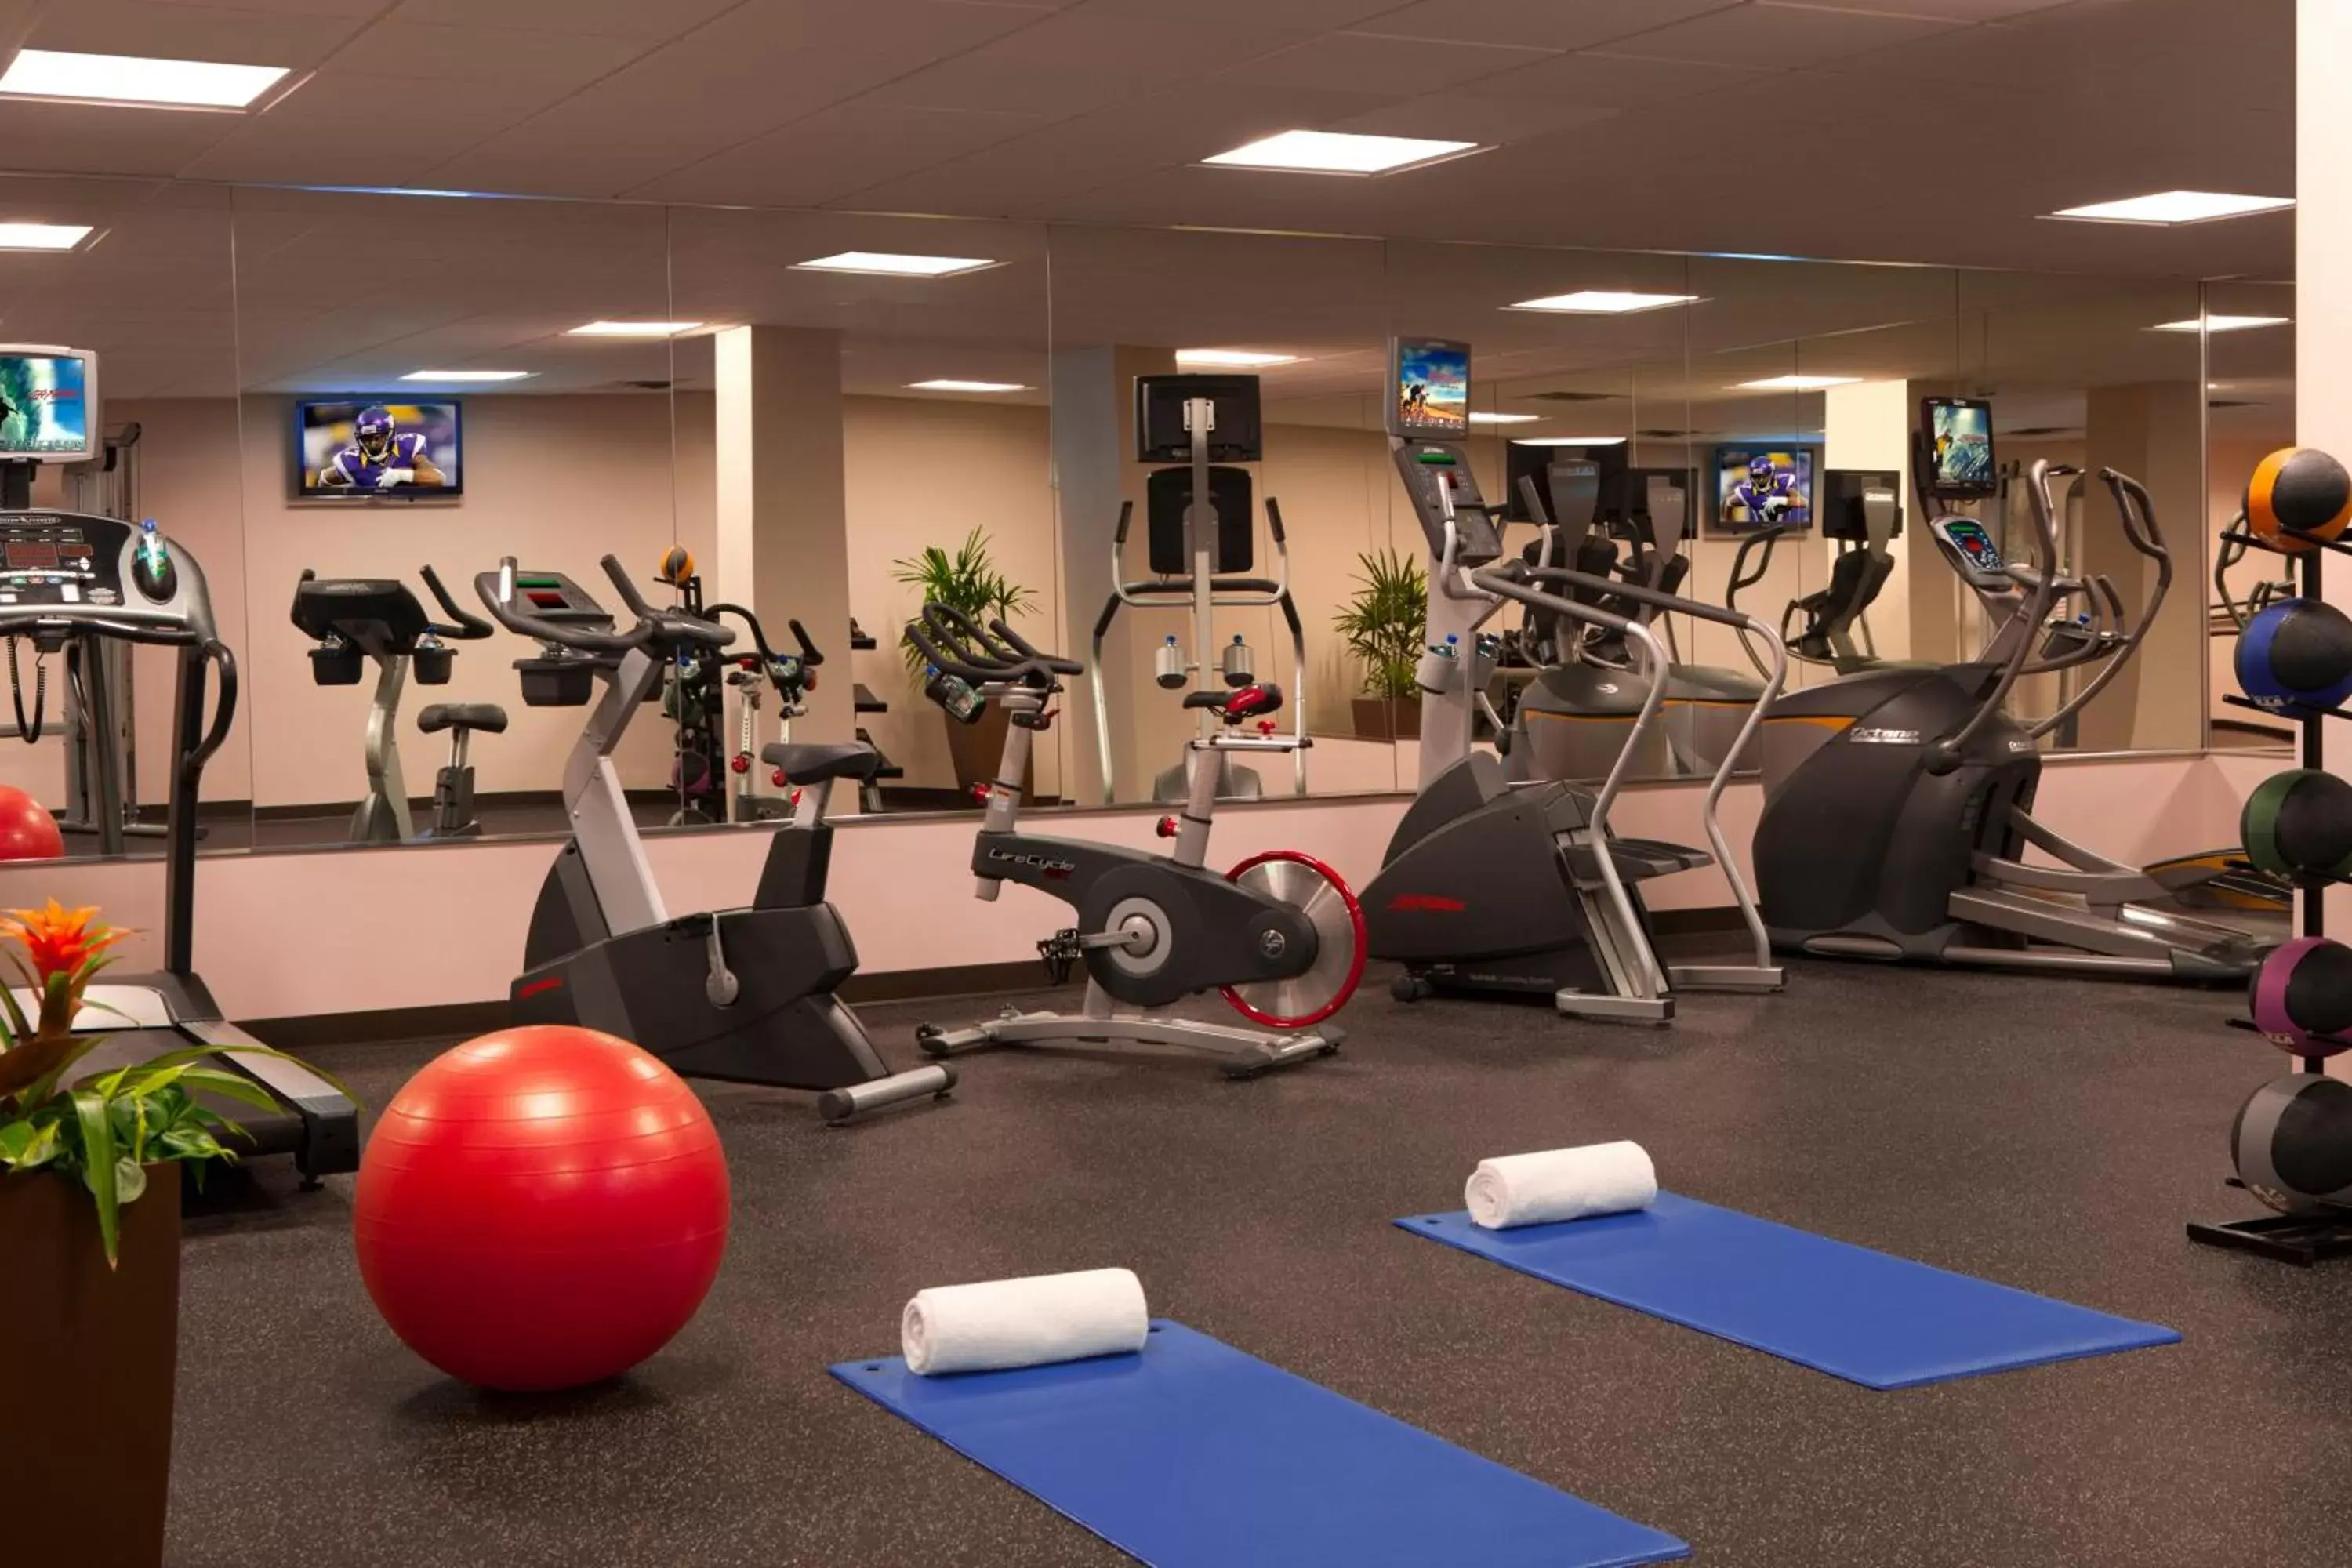 Fitness centre/facilities, Fitness Center/Facilities in Millennium Minneapolis